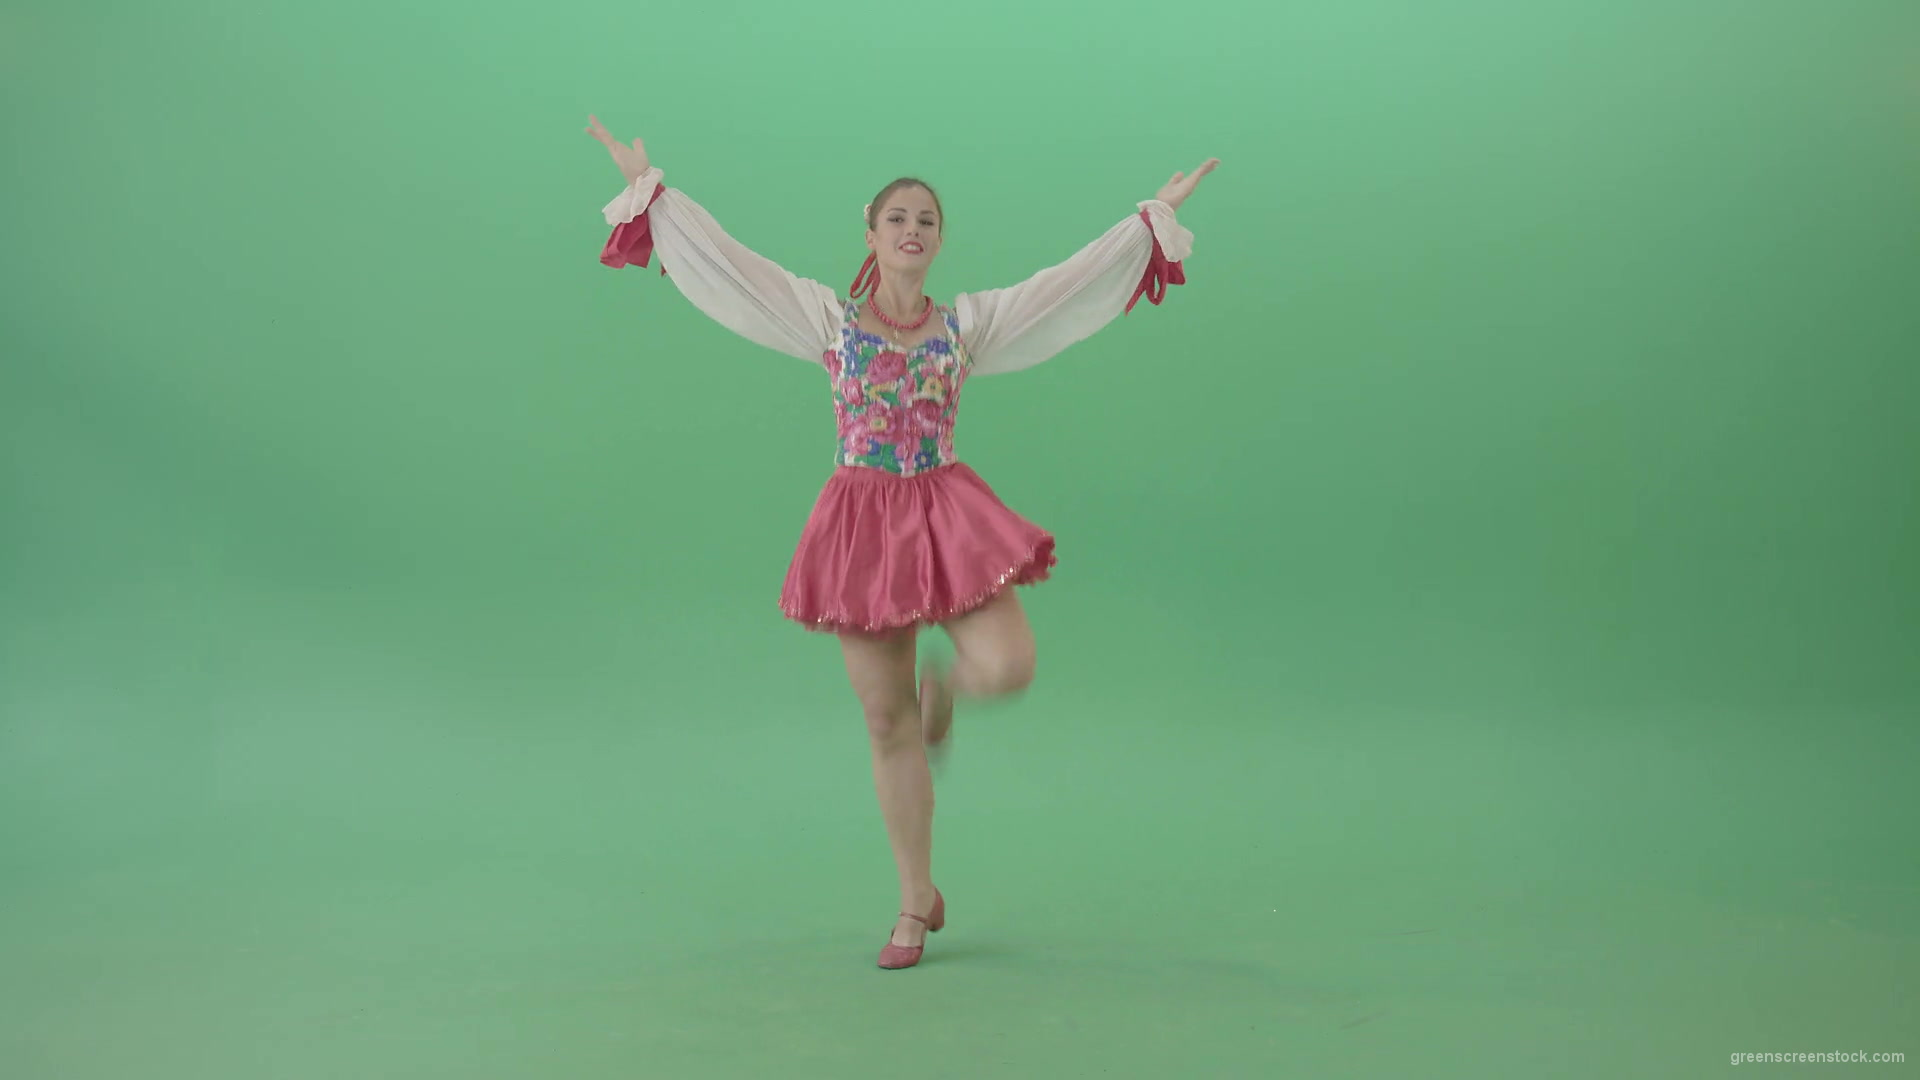 Ukraine-Folk-Girl-dancing-ethno-social-ukrainian-dance-isolated-on-Green-Screen-1920_007 Green Screen Stock